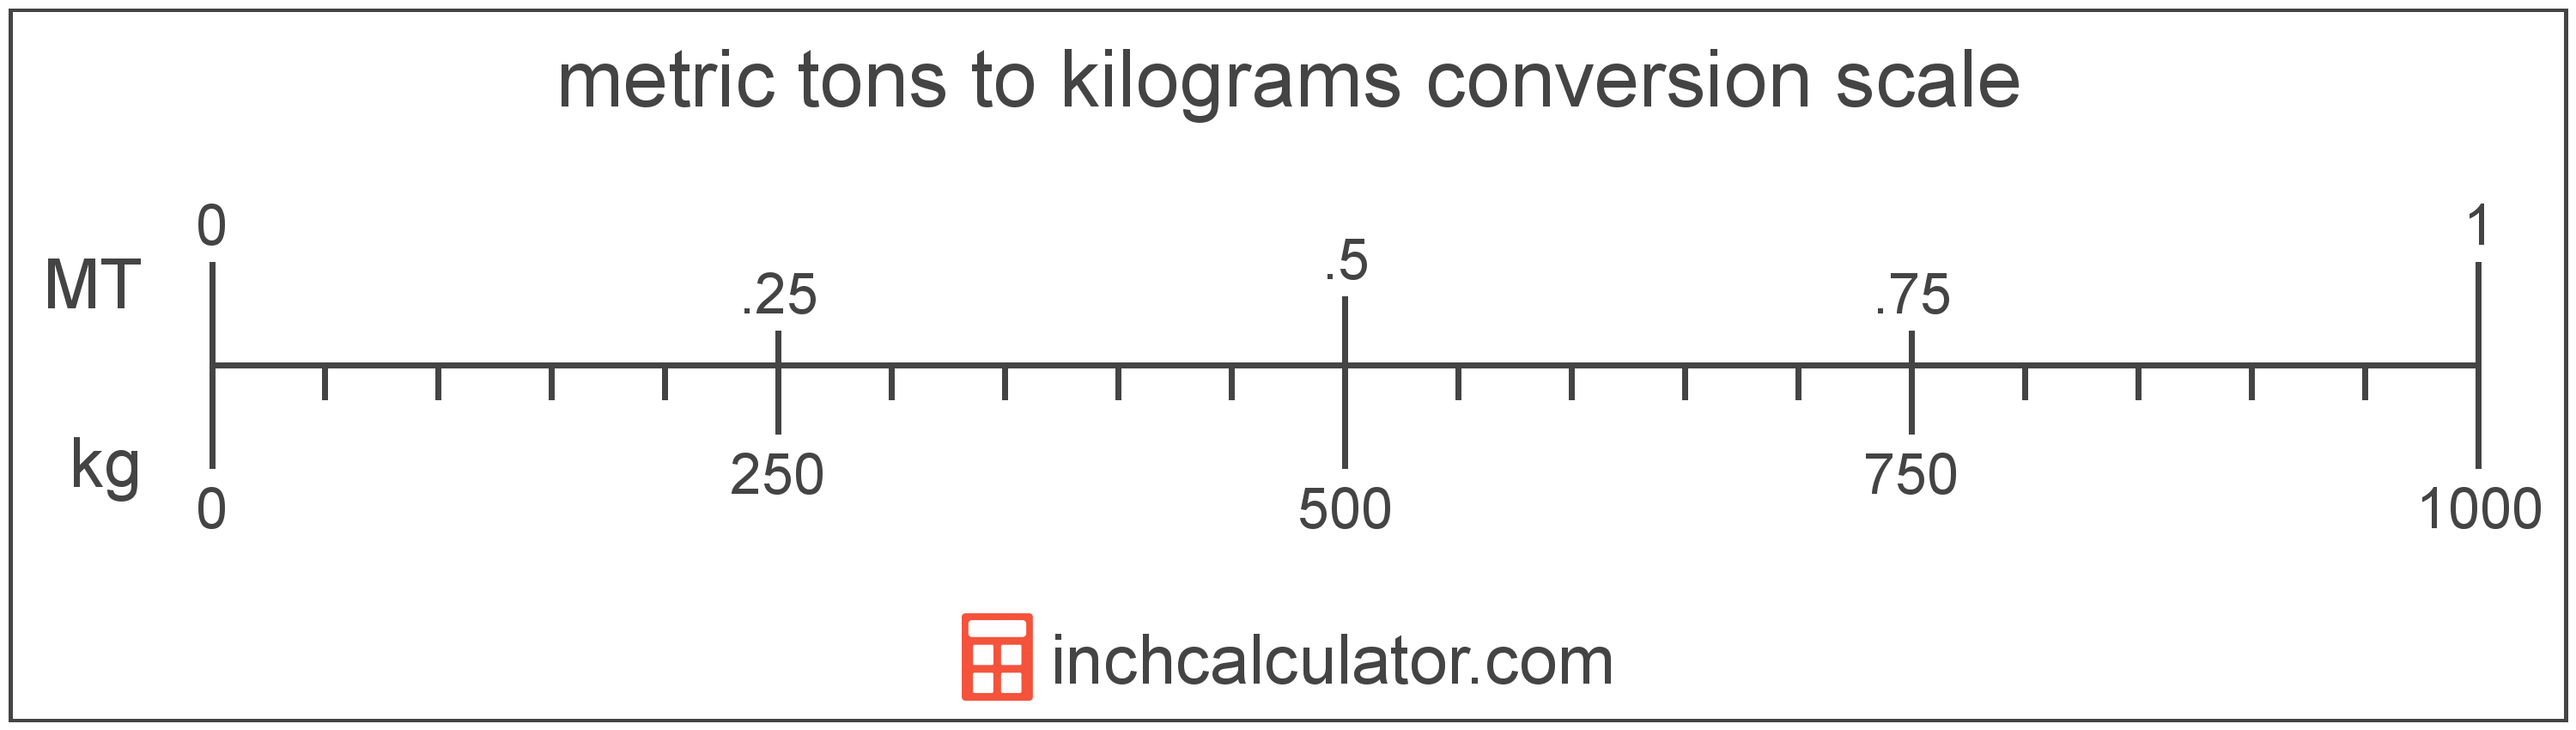 Kilograms to Metric Tons Conversion (kg to